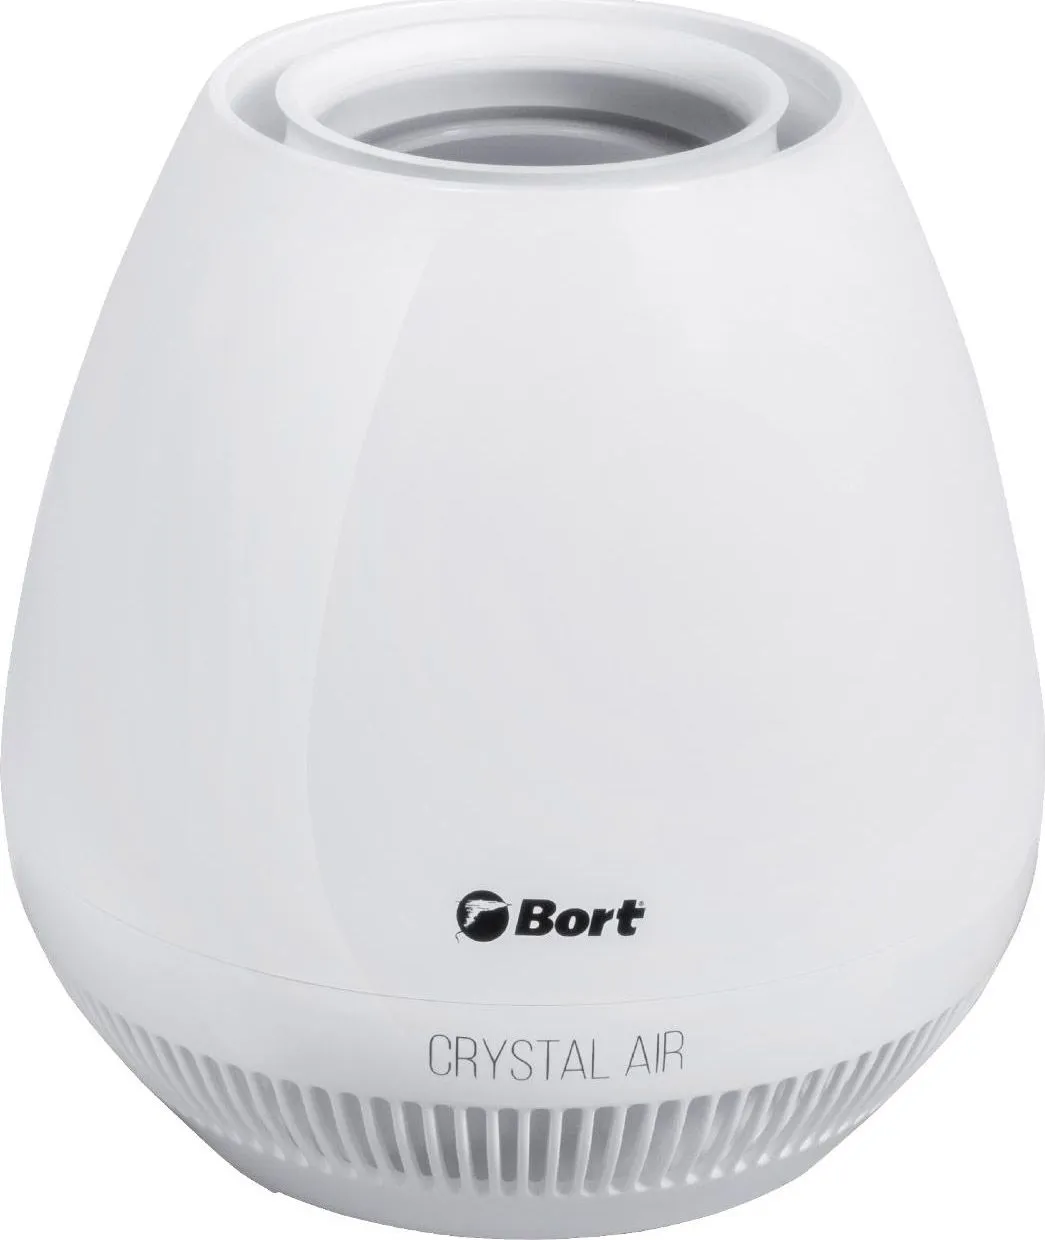 Bort Crystal Air (93411621)